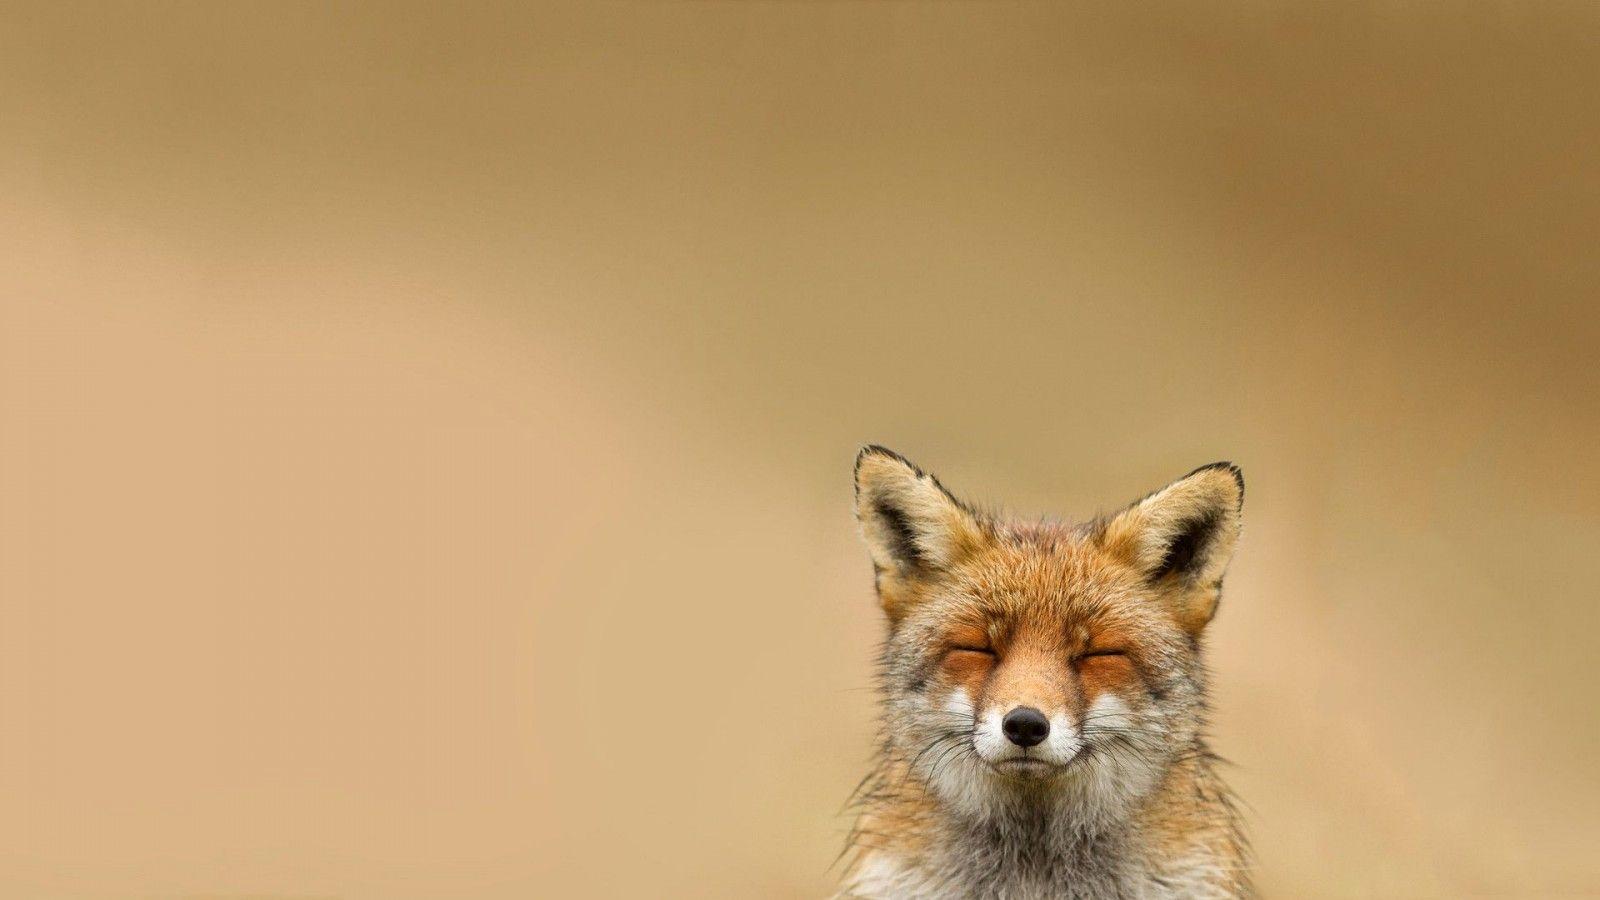 Baby Fox Wallpaper 34469 1600x900 px